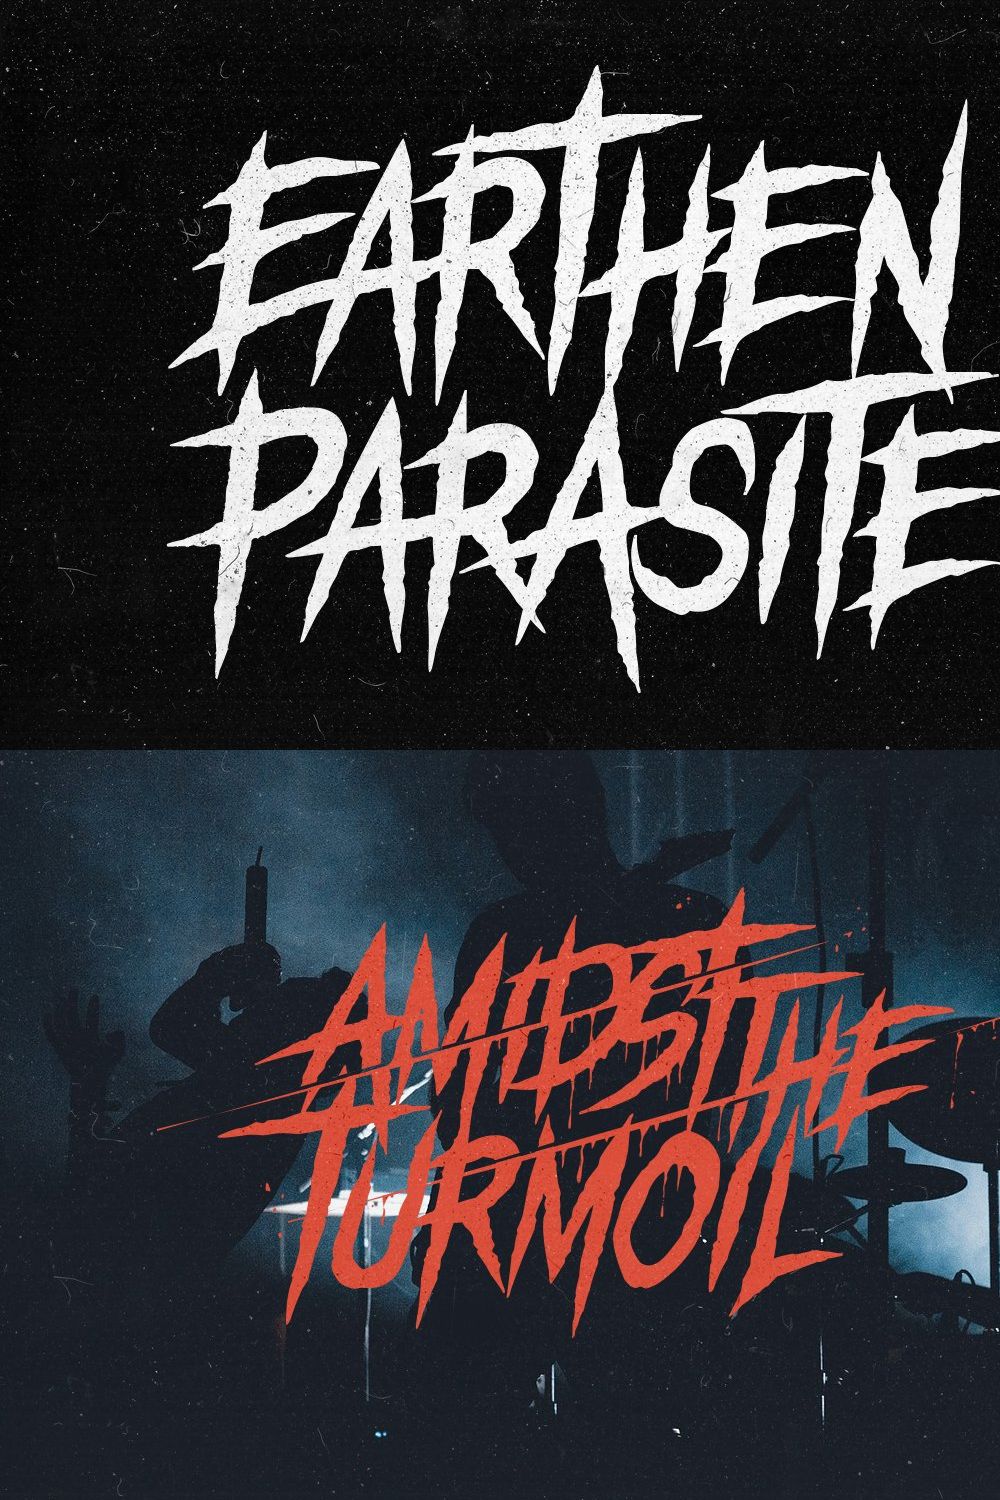 Earthen Parasite - Horror Font pinterest preview image.